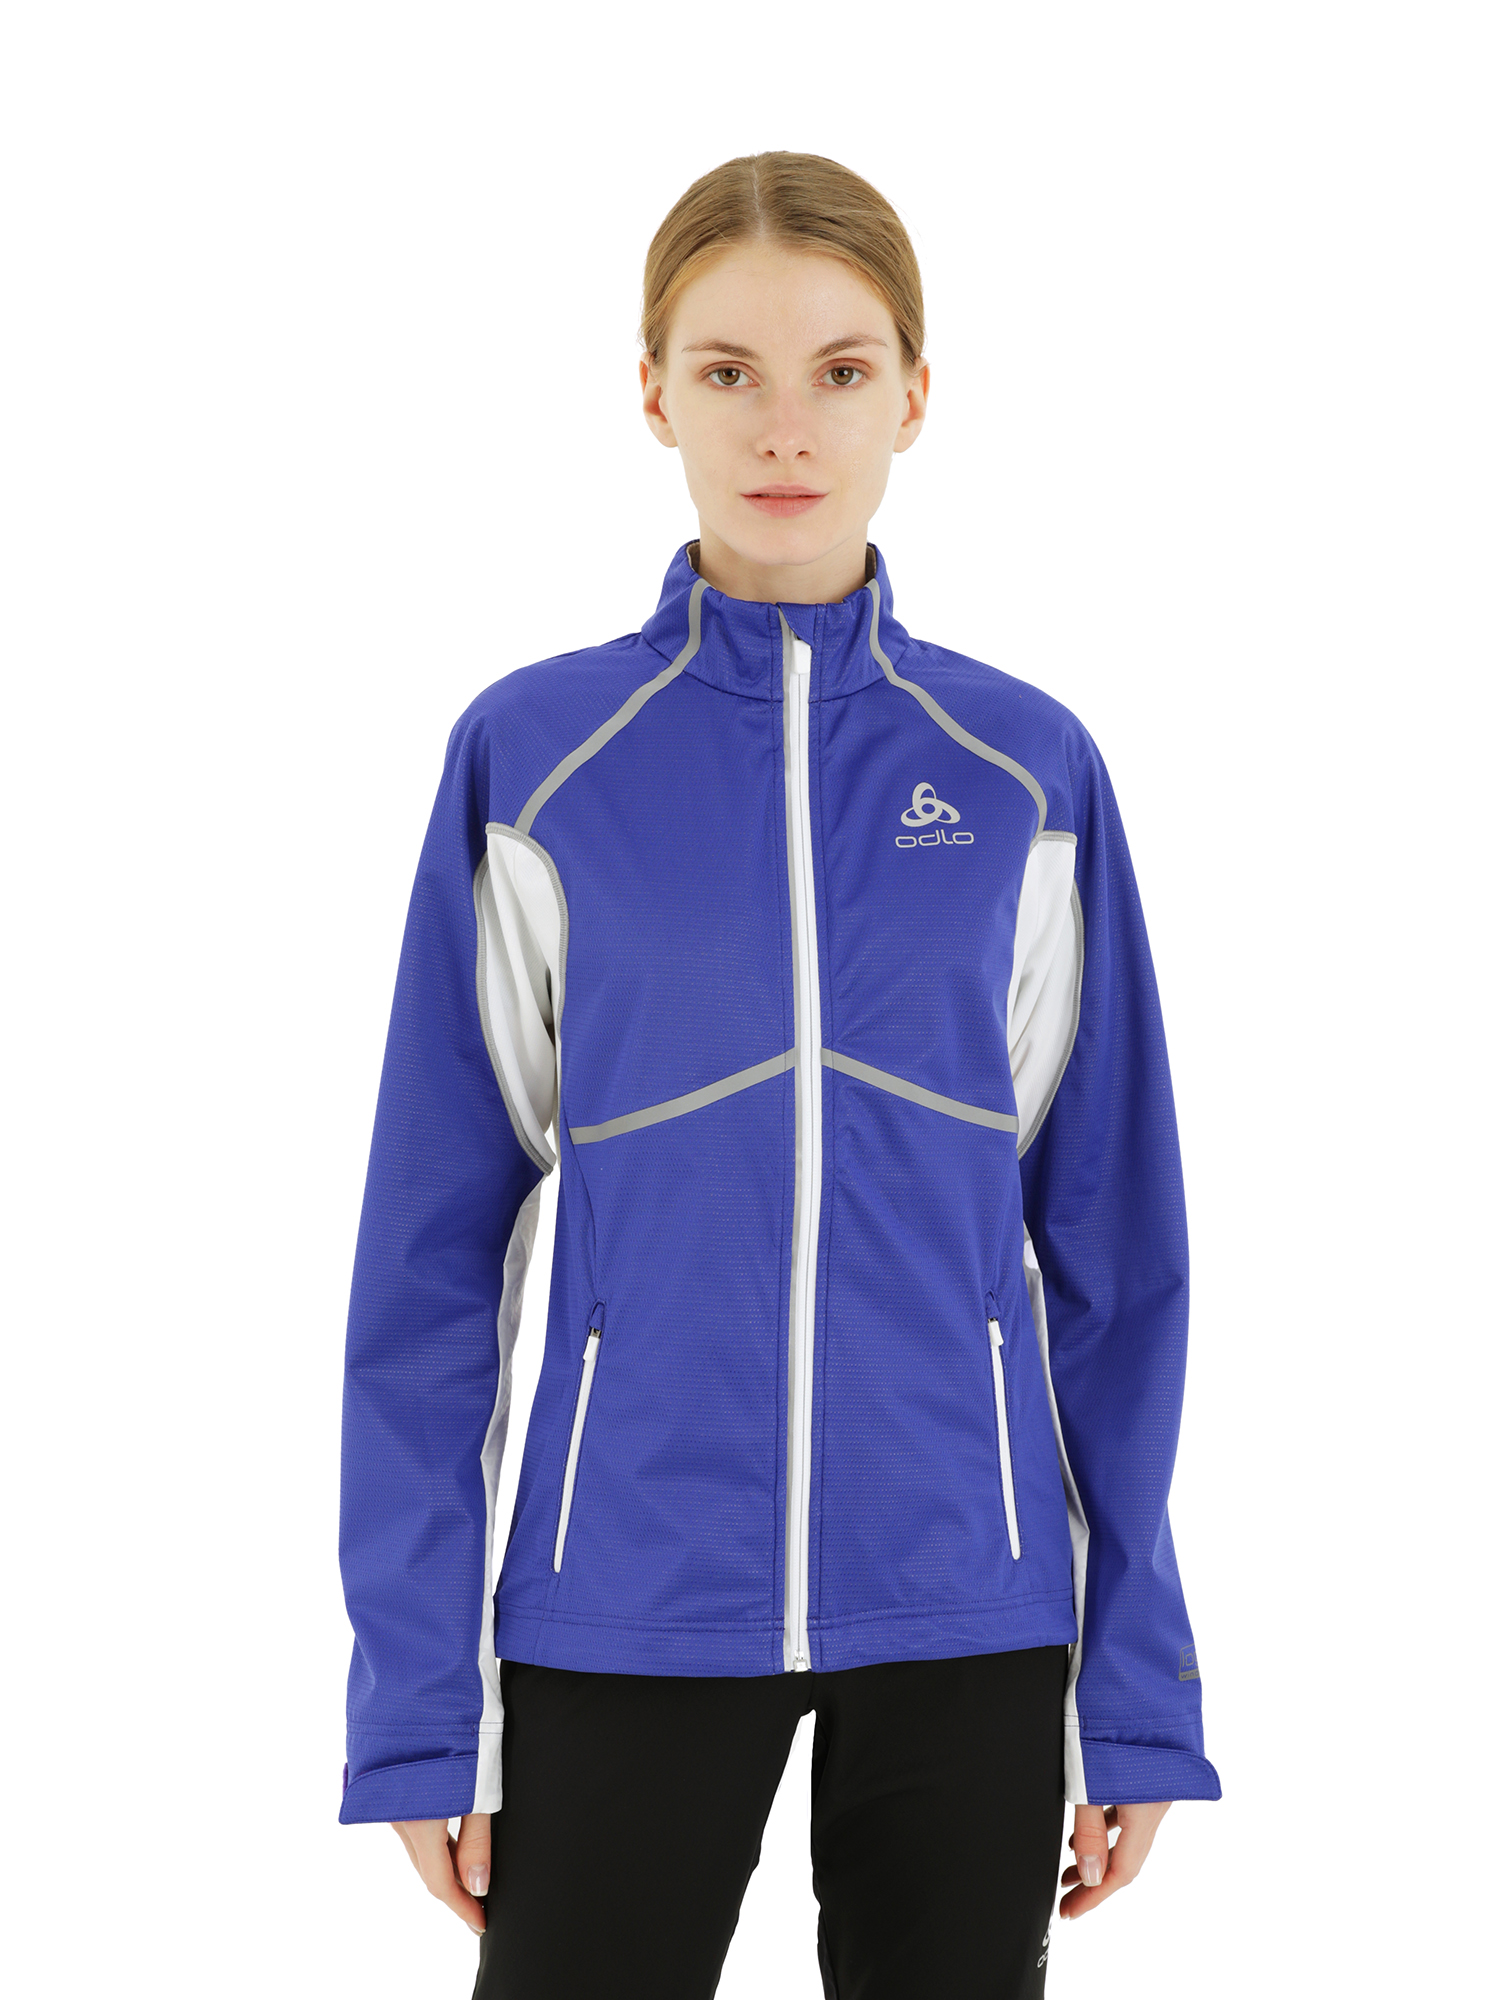 фото Спортивная ветровка женская odlo jacket frequency x синяя l